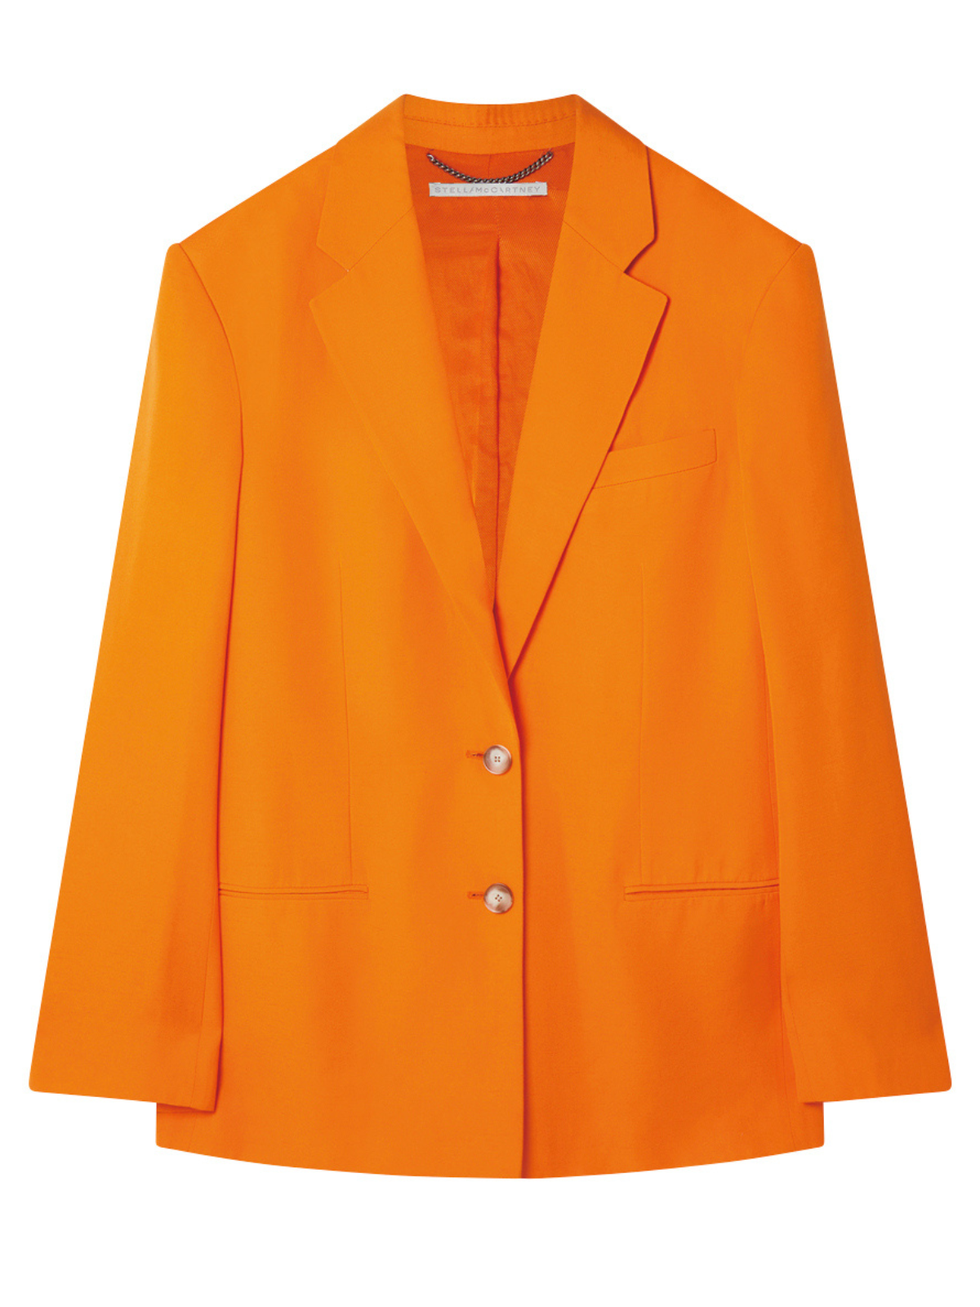 a yellow and orange jacket